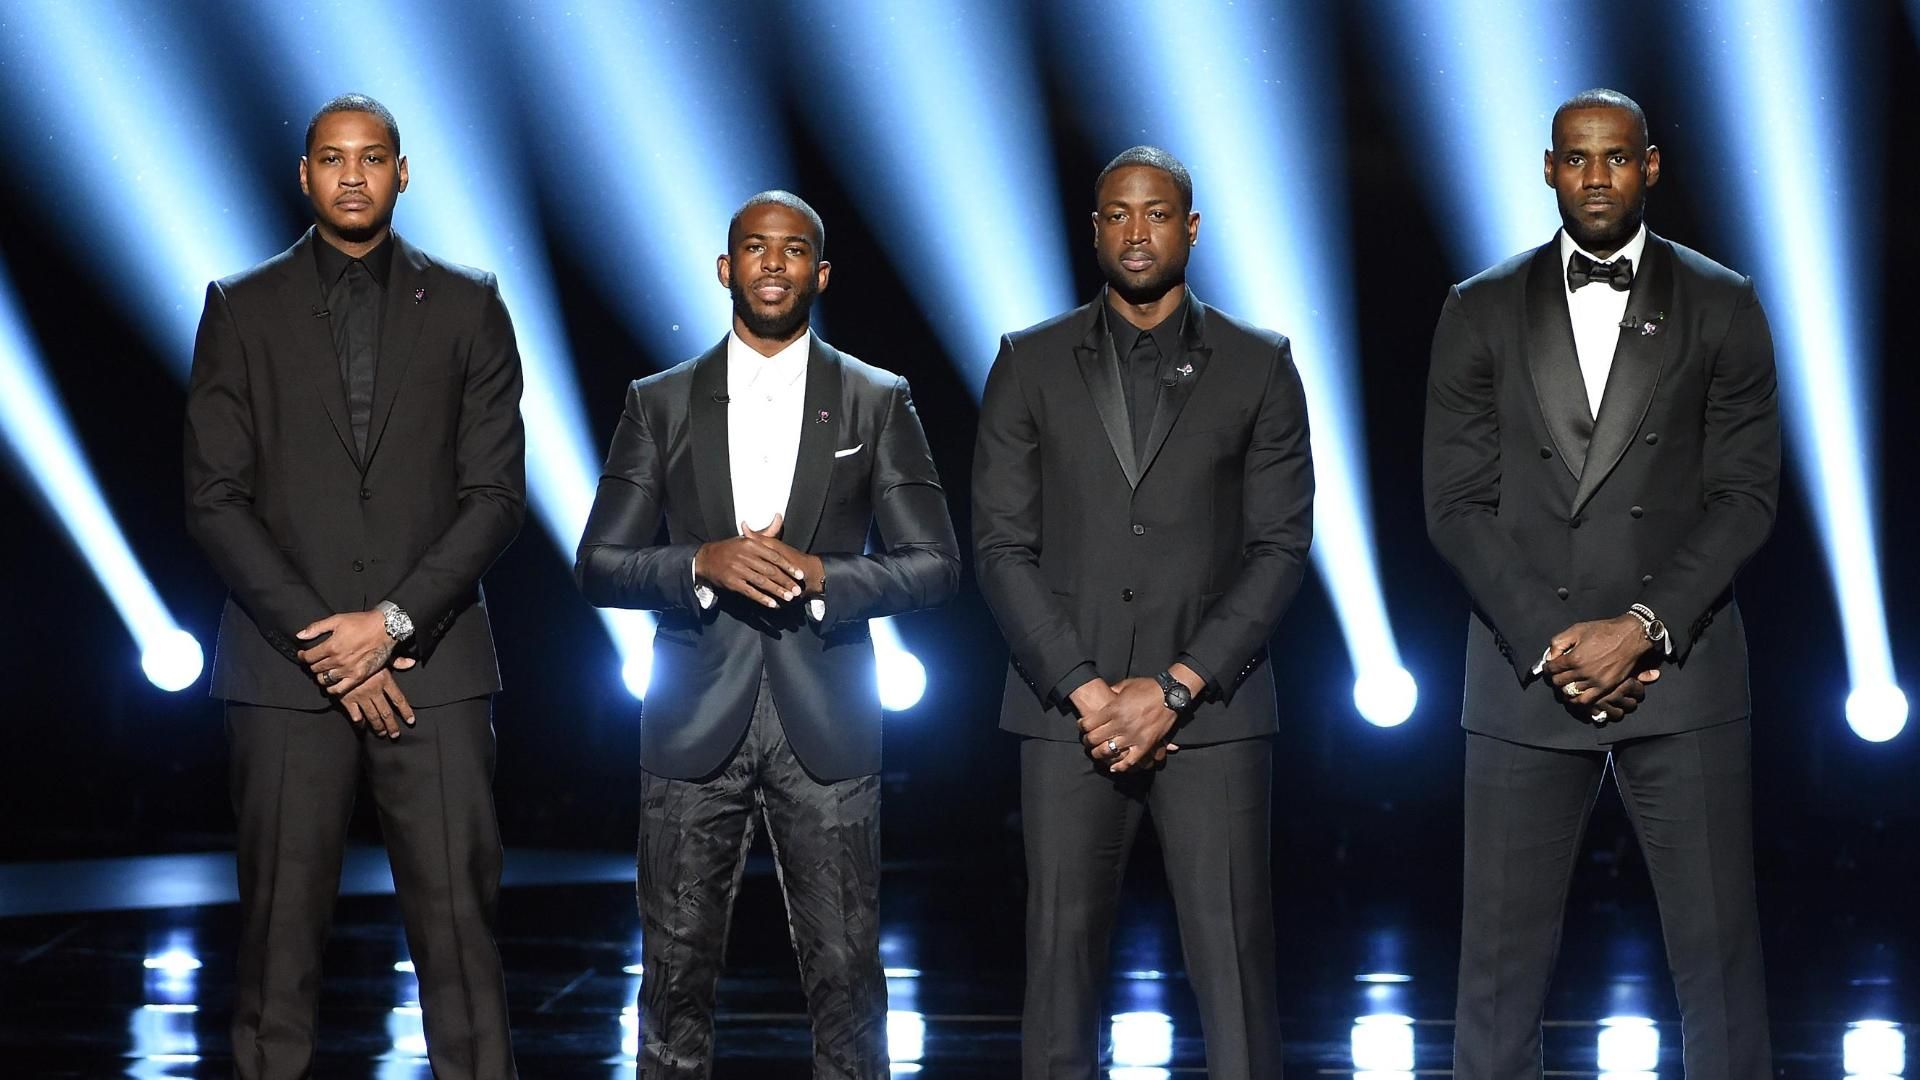 NBA stars call for an end to violence